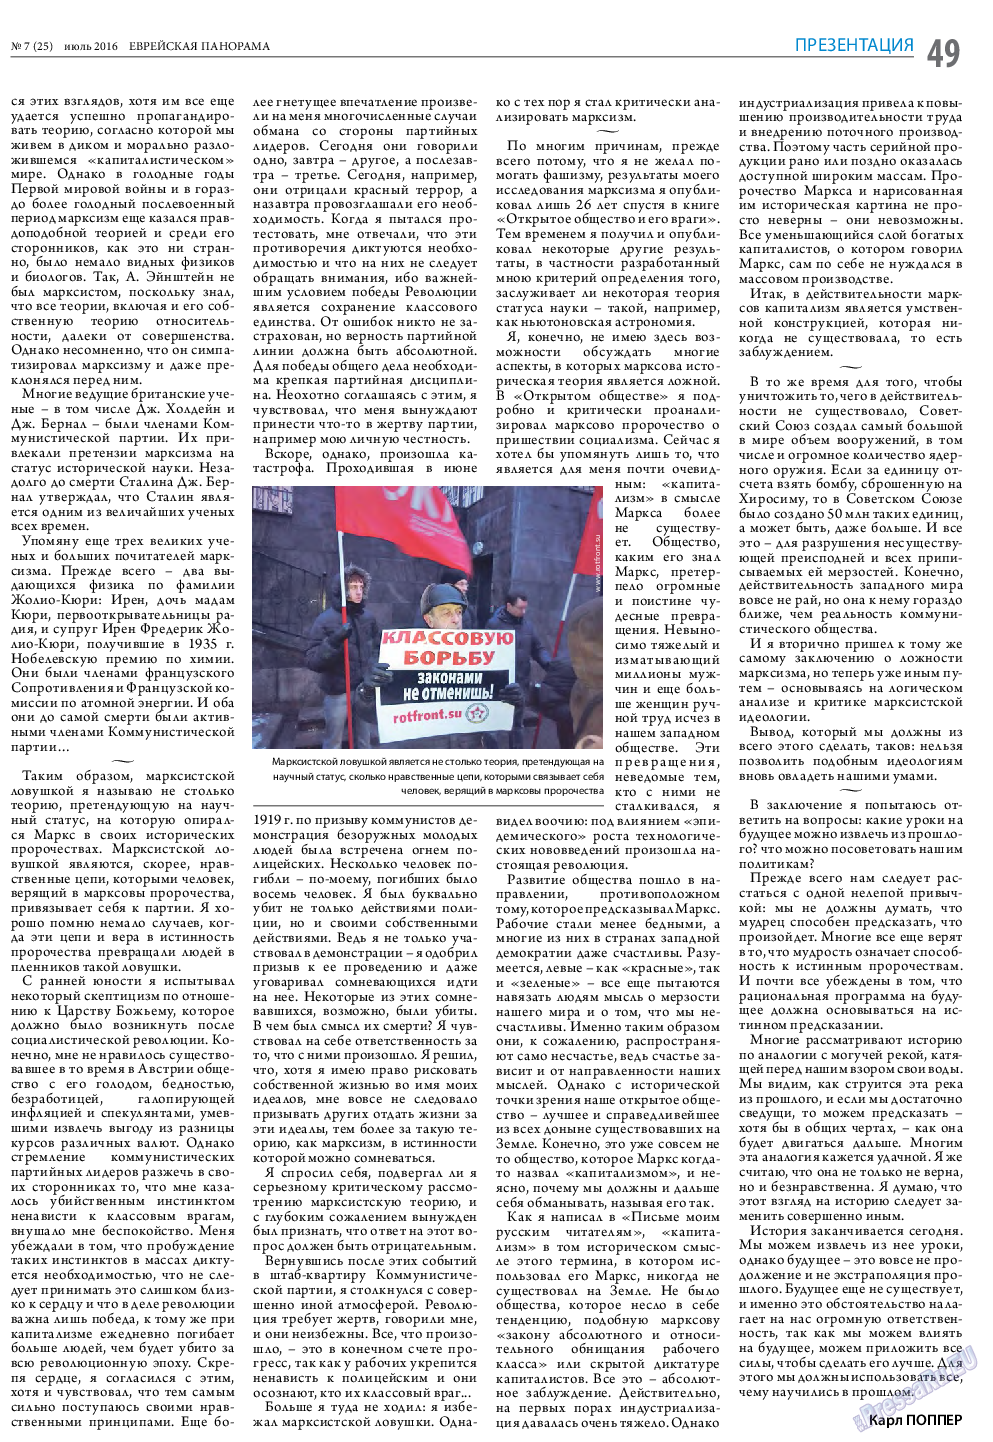 Еврейская панорама, газета. 2016 №7 стр.49